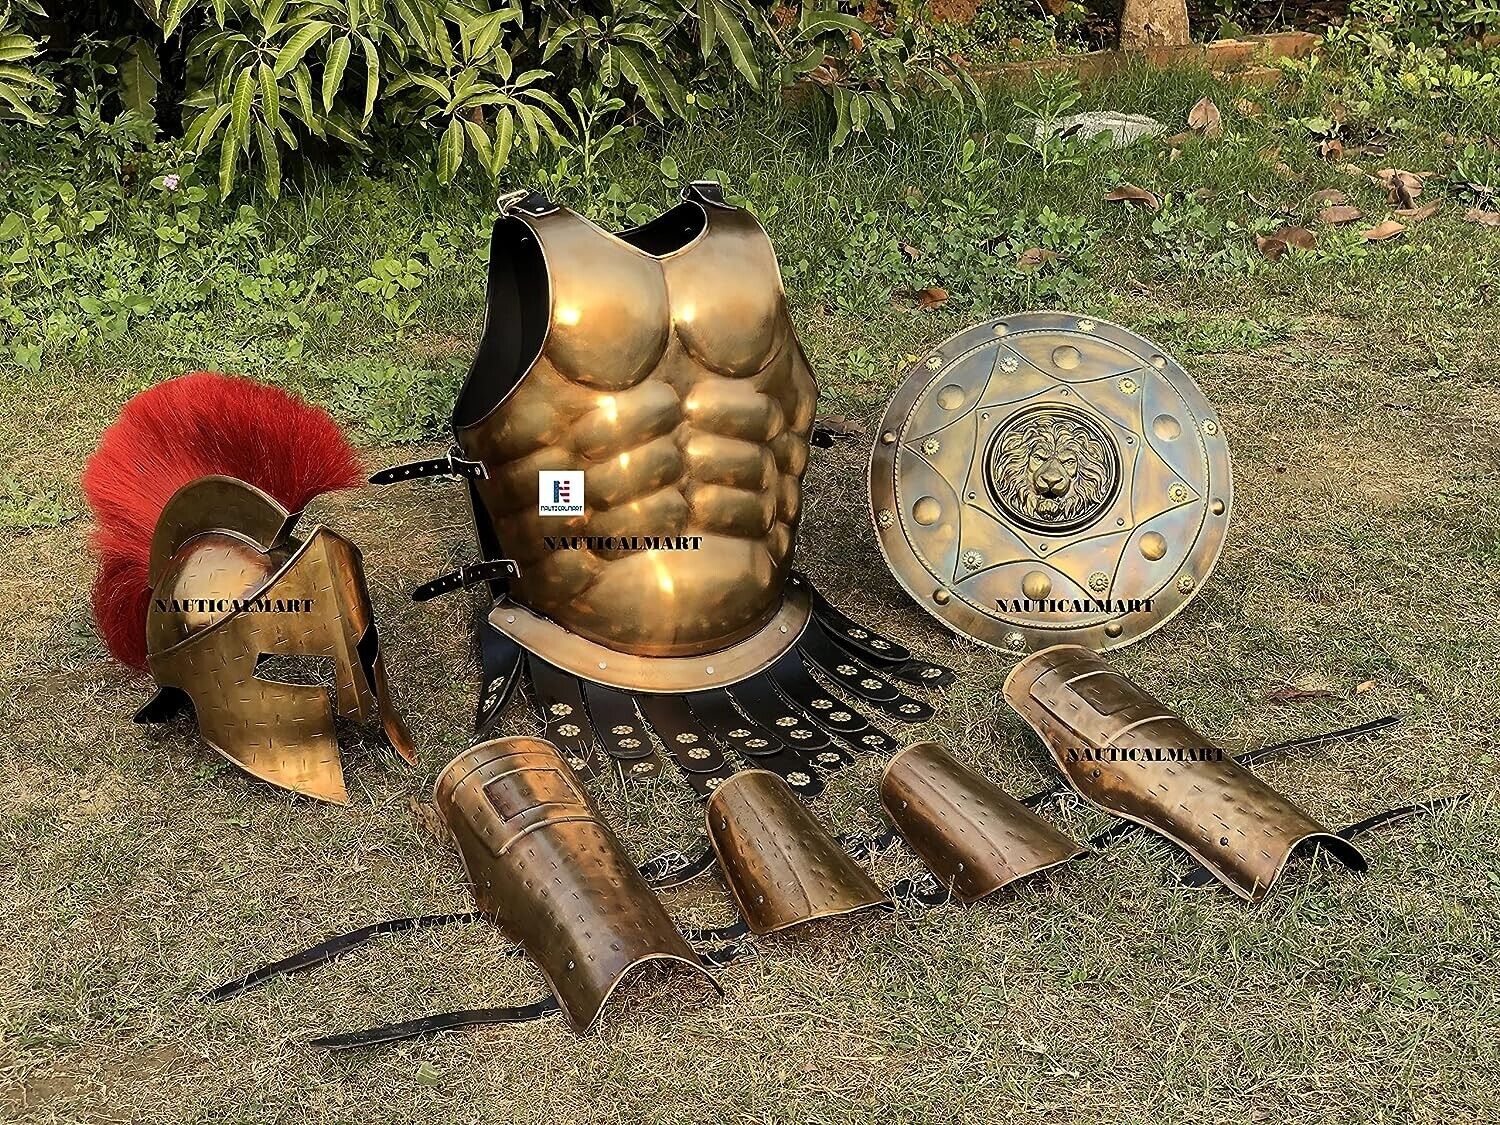 NauticalMart Medieval Roman King Leonidas 300 Spartan Helmet W/Red Plume + Muscl